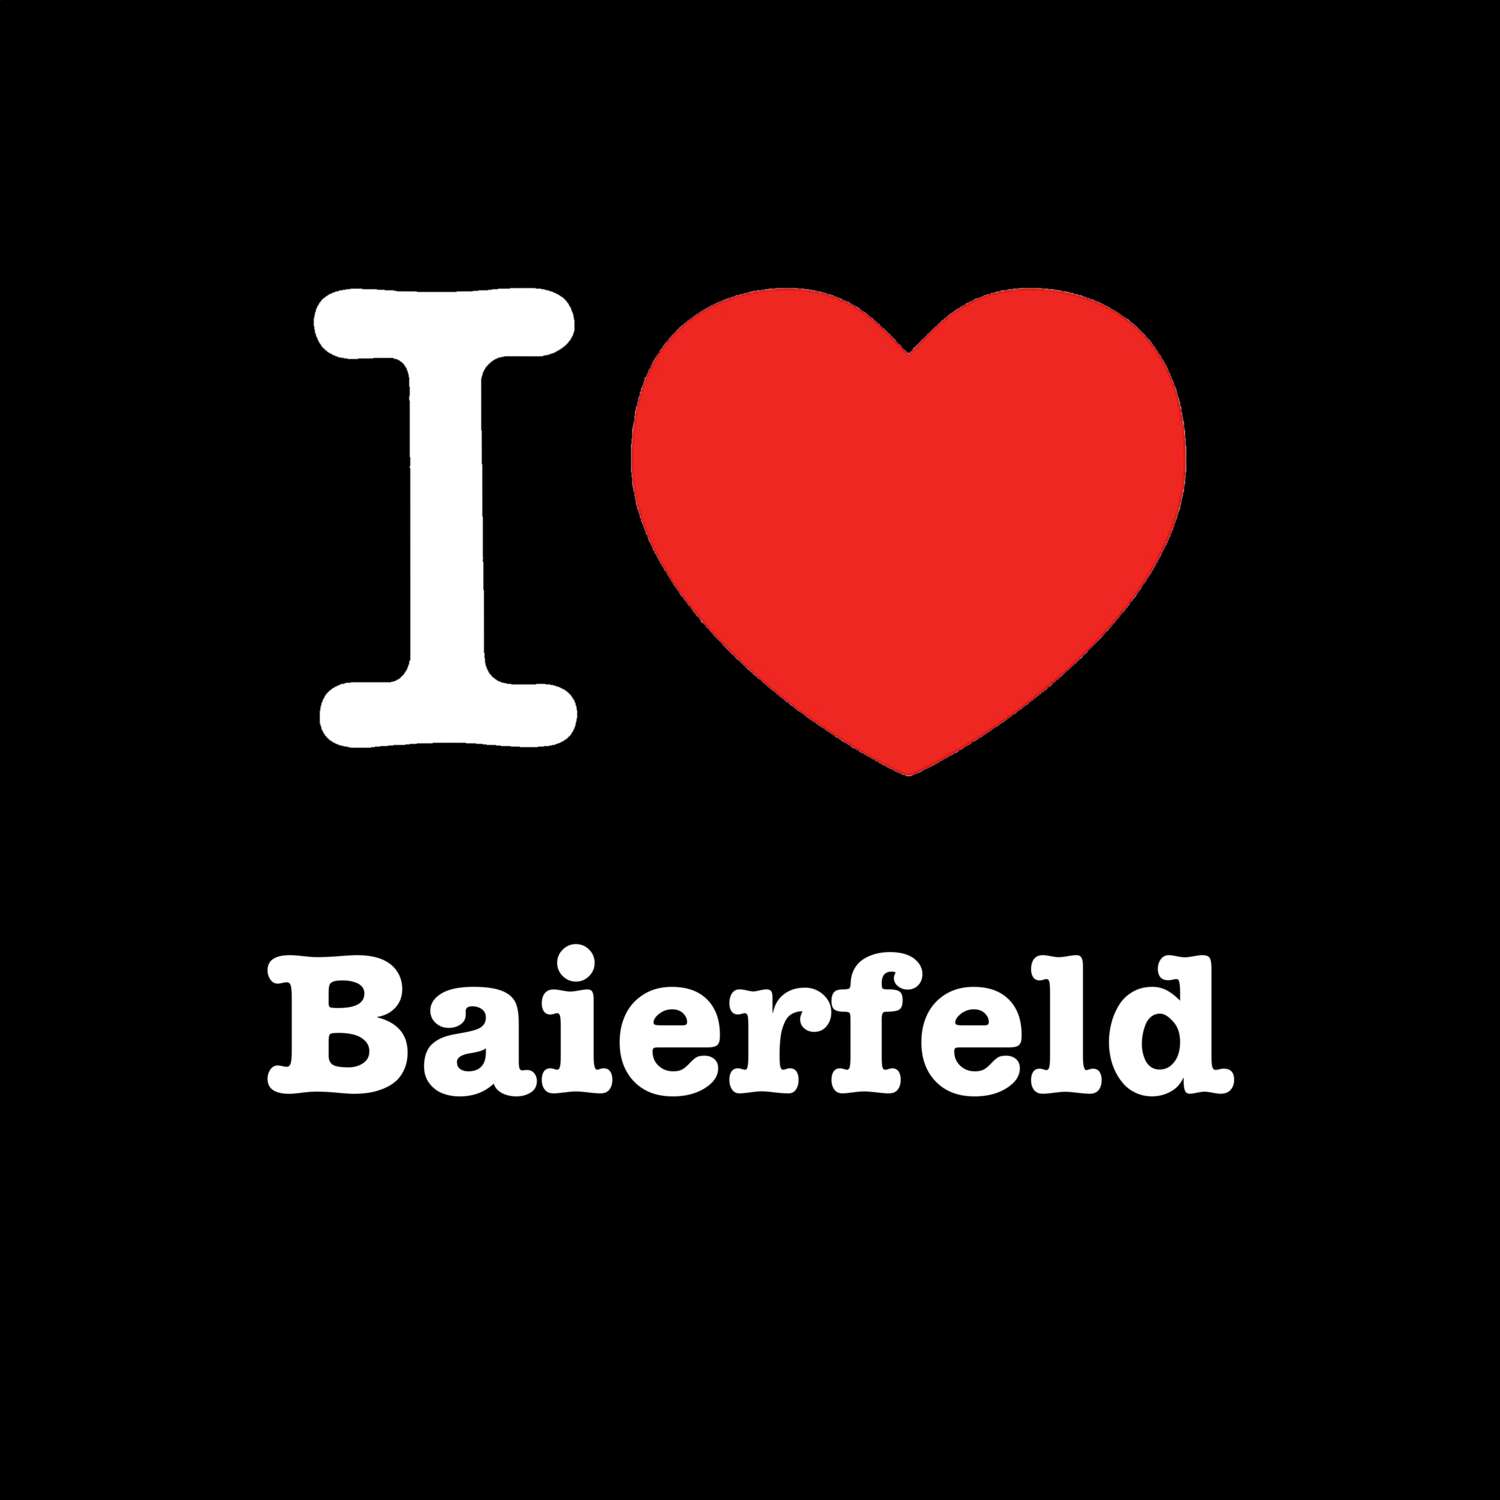 Baierfeld T-Shirt »I love«